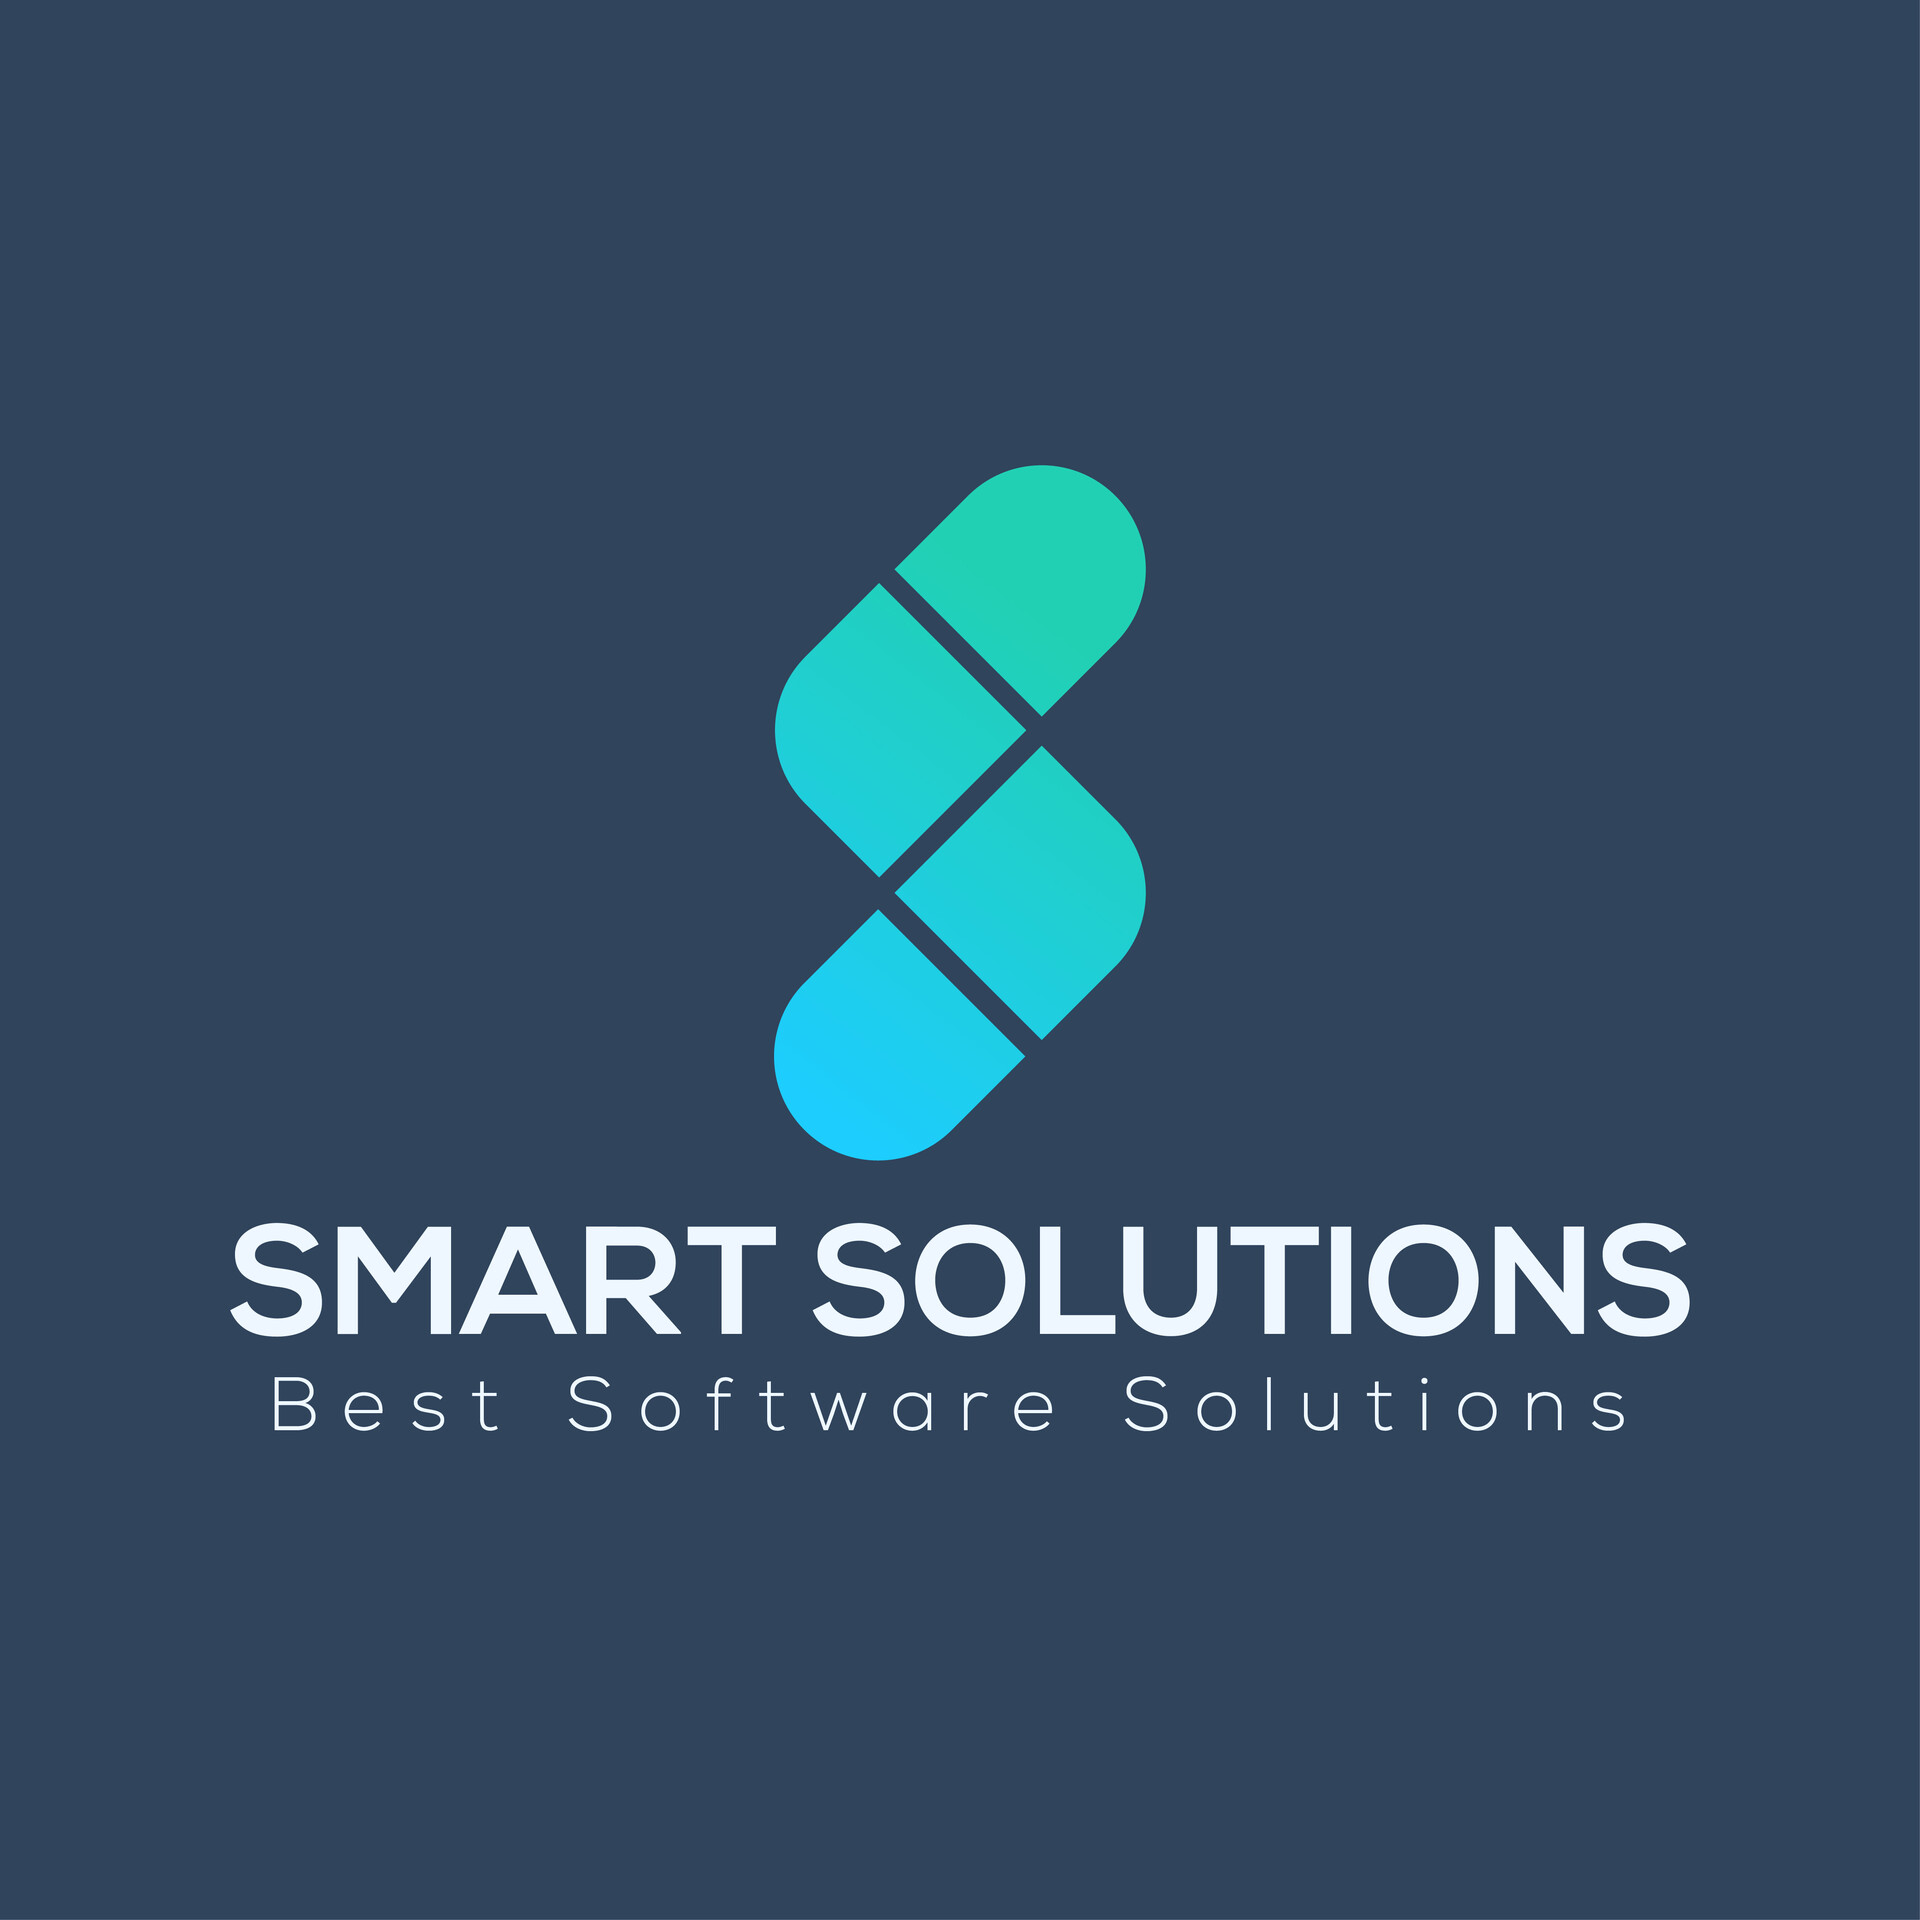 ArtStation - Smart Solutions - Best Software Solutions